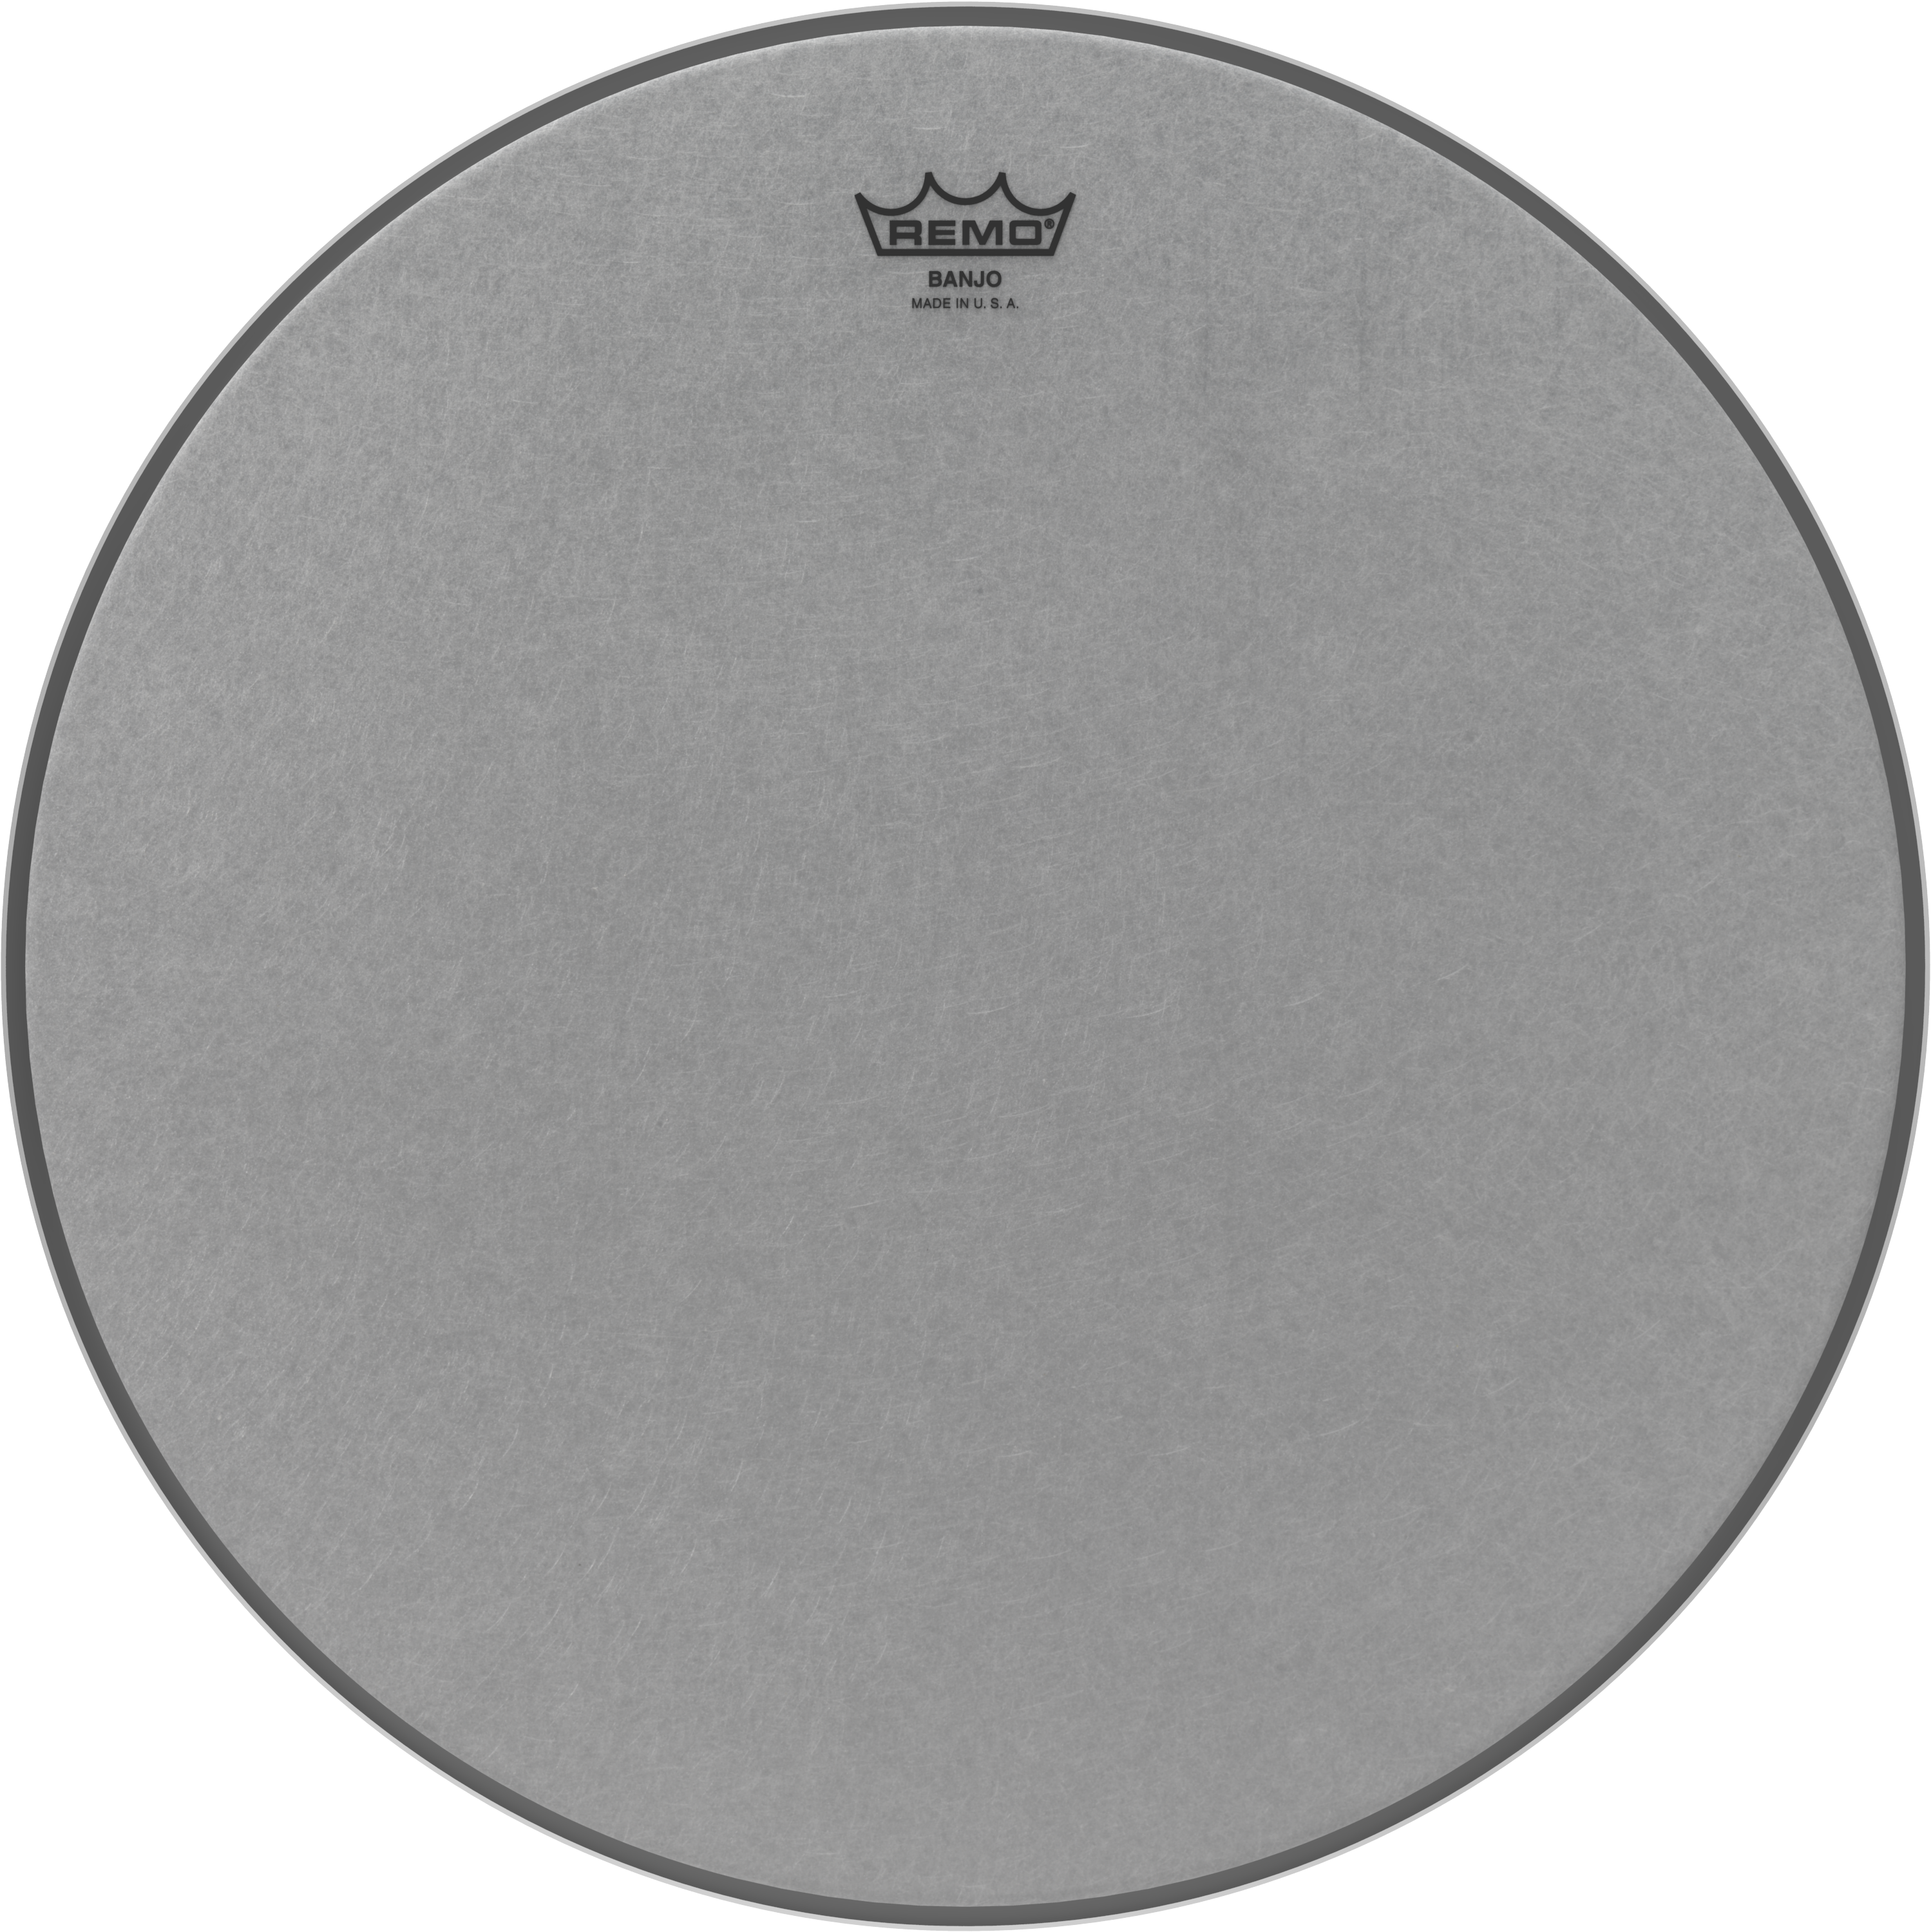 Remo Banjo Head Renaissance-medium Collar, 11" - Circle (3300x3300), Png Download